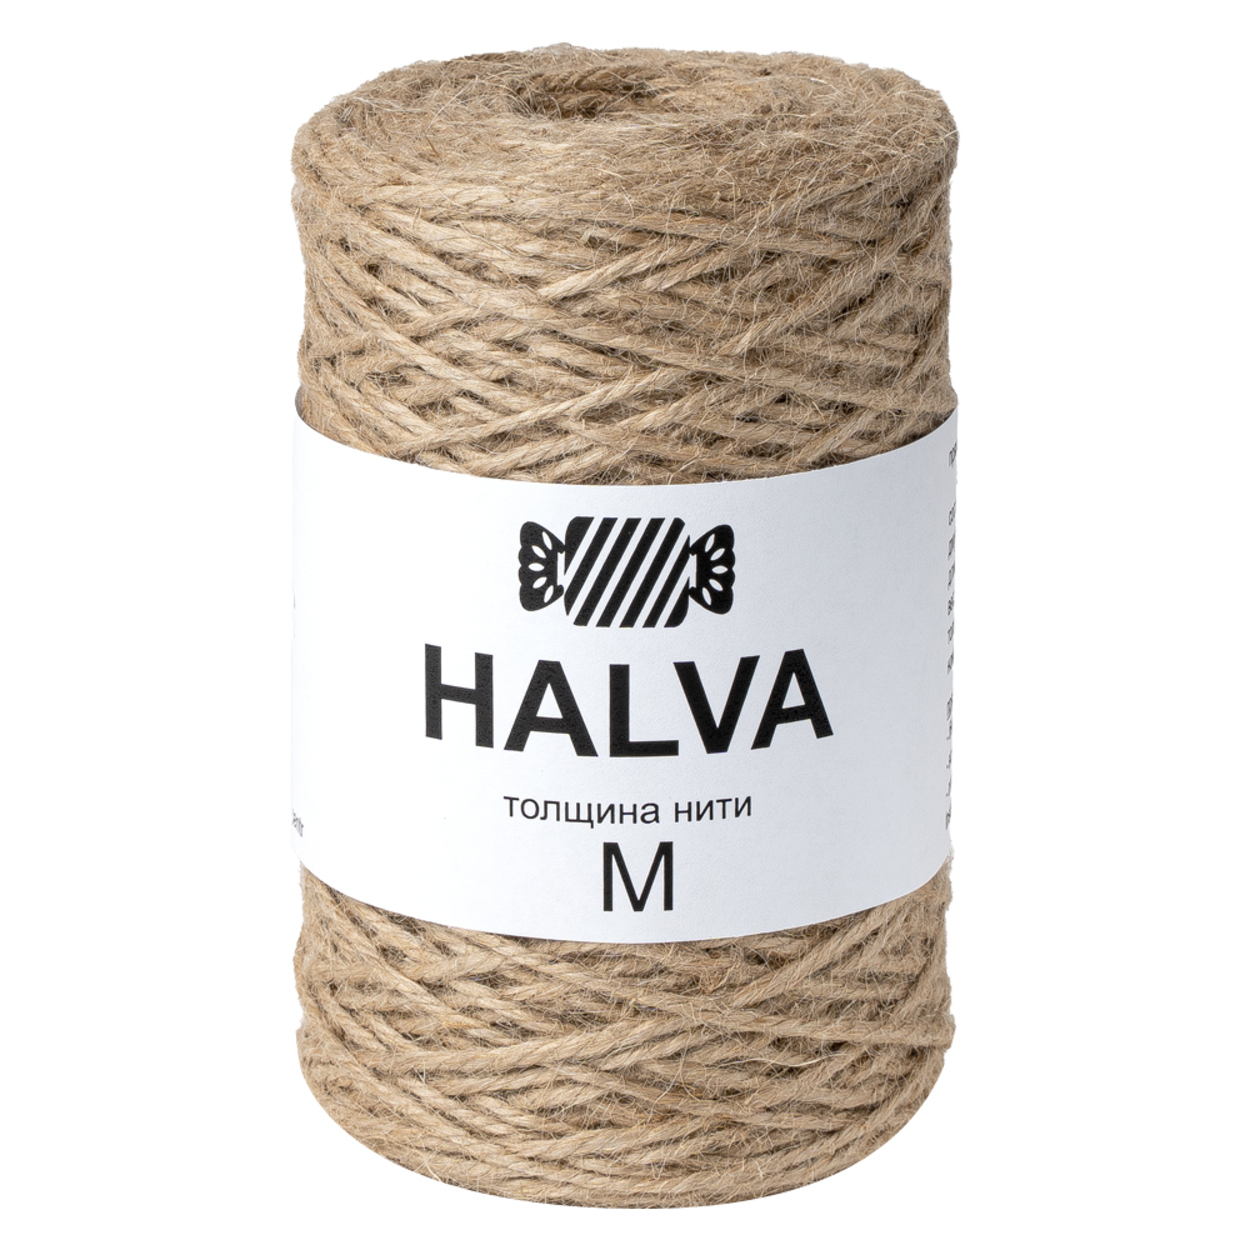 Шнуры для вязания Halva джут толщина нити М 150 м m-1250x1250_1_.jpg